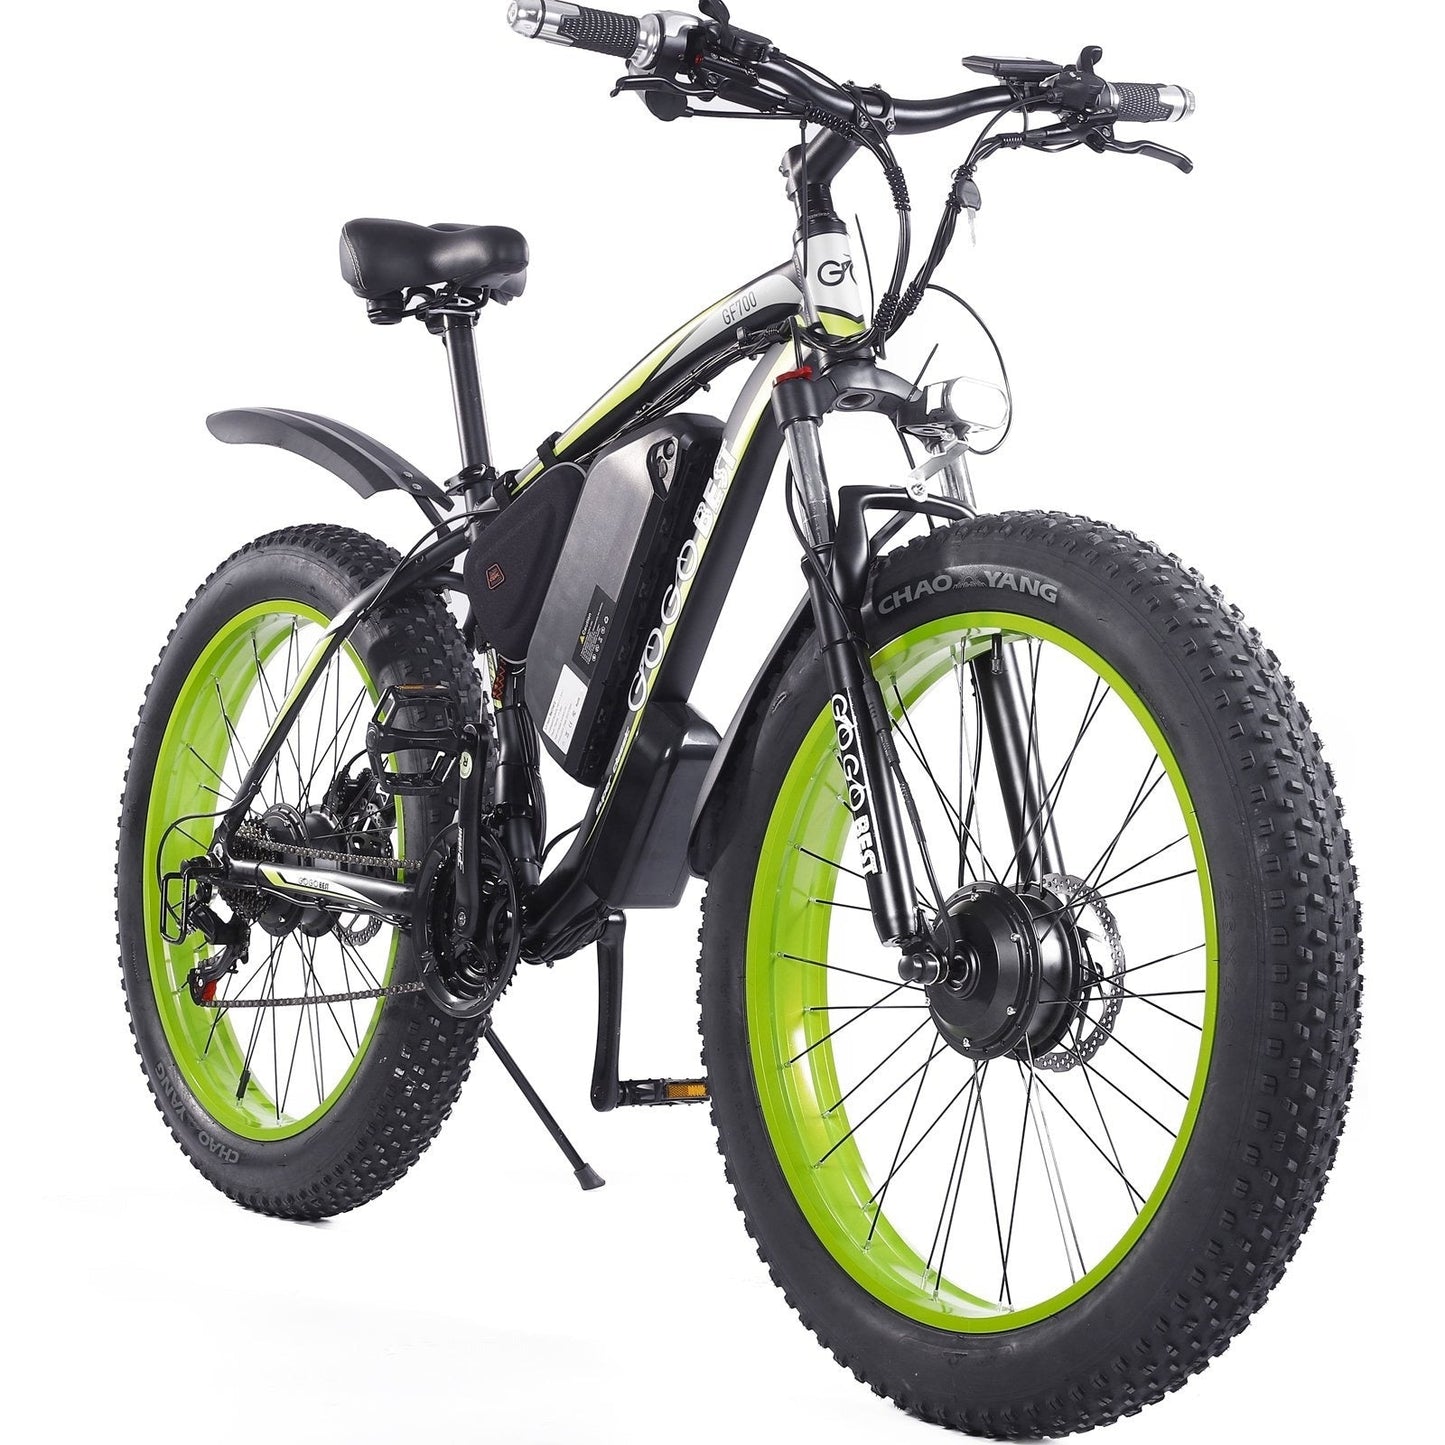 GOGOBEST GF700 Electric Mountain Bike Dual-Motor Moped E-bike BlackGreen 3